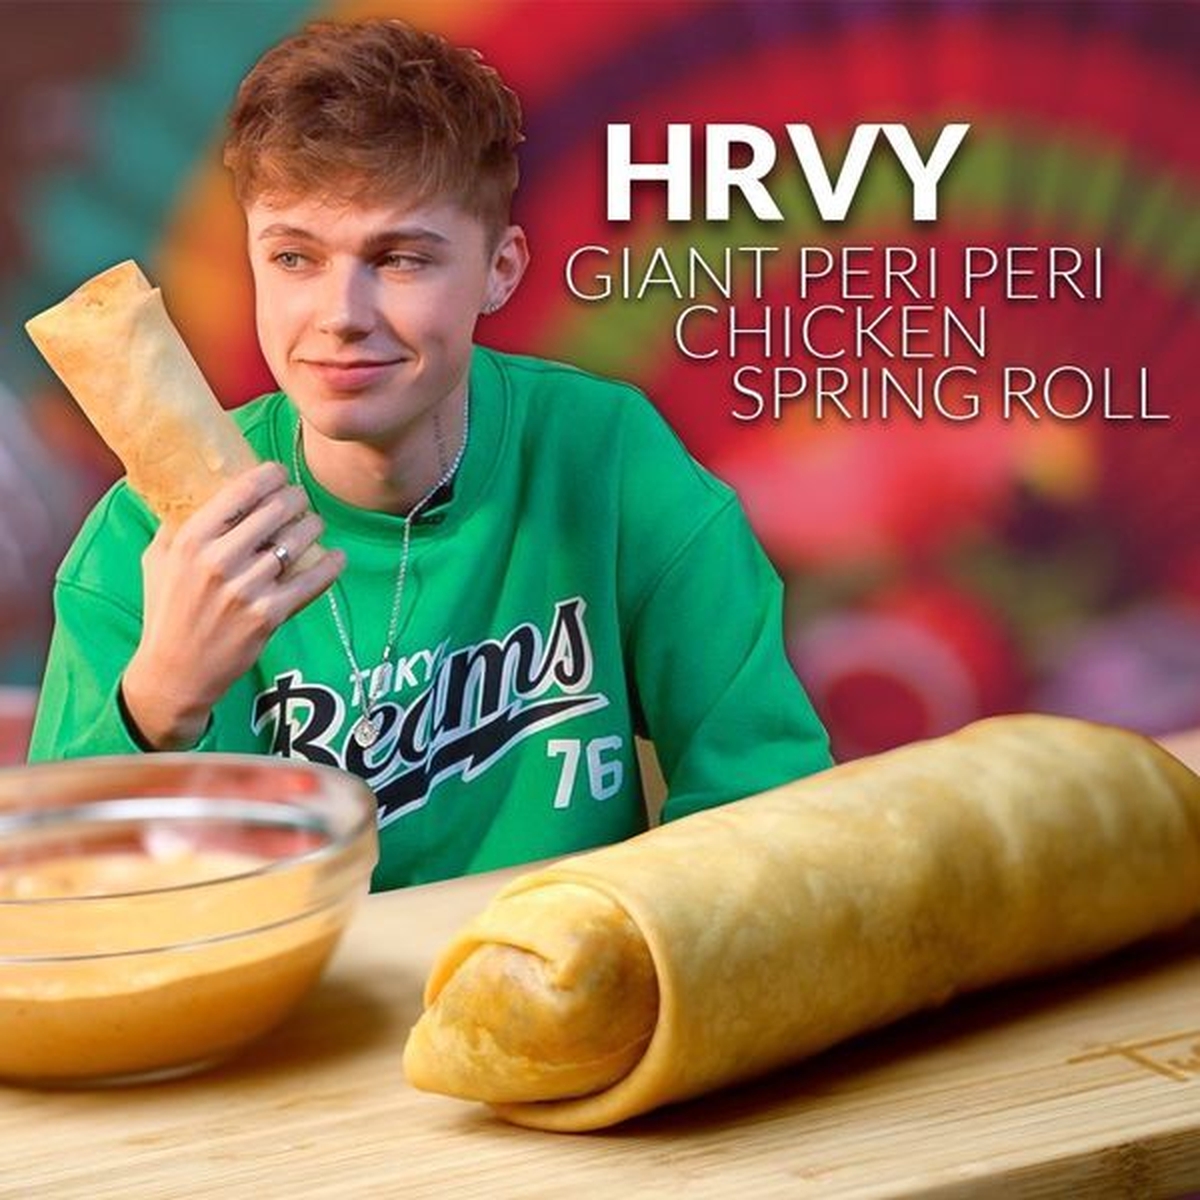 Giant Peri Peri Chicken Spring Roll Recipe | Twisted